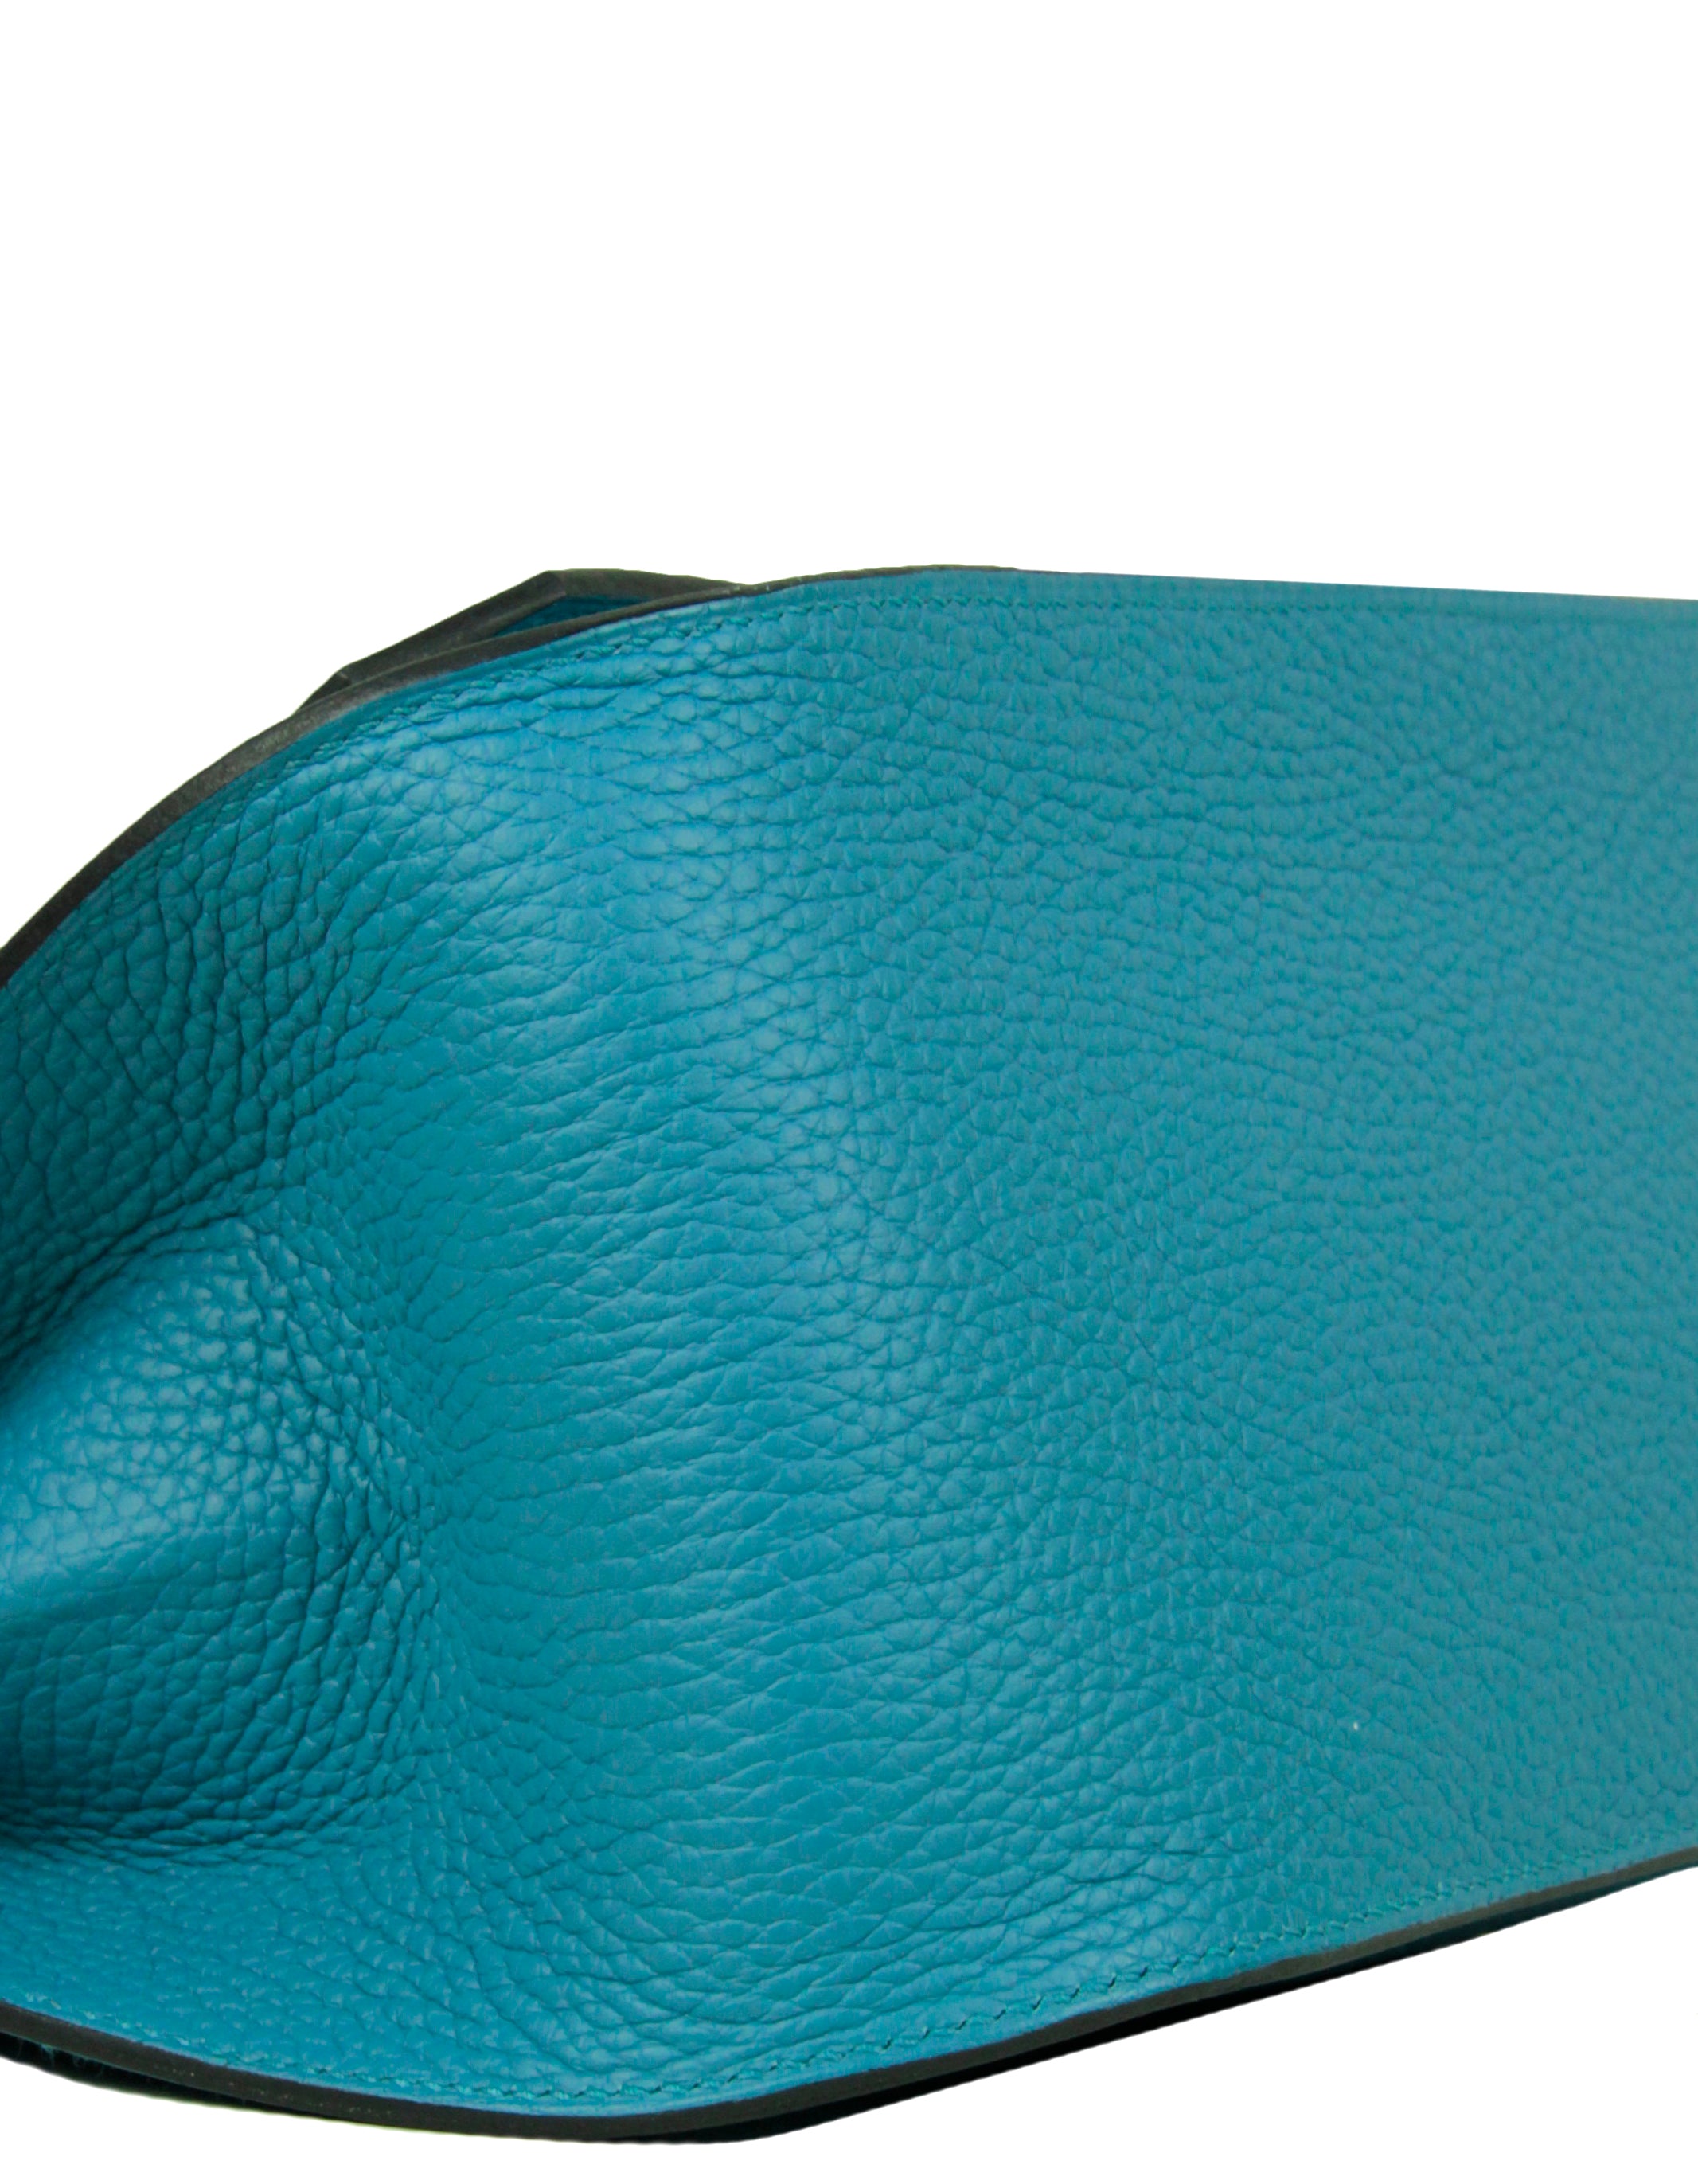 Hermes Blue Taurillon Clemence Leather Jypsiere 28 Messenger Bag